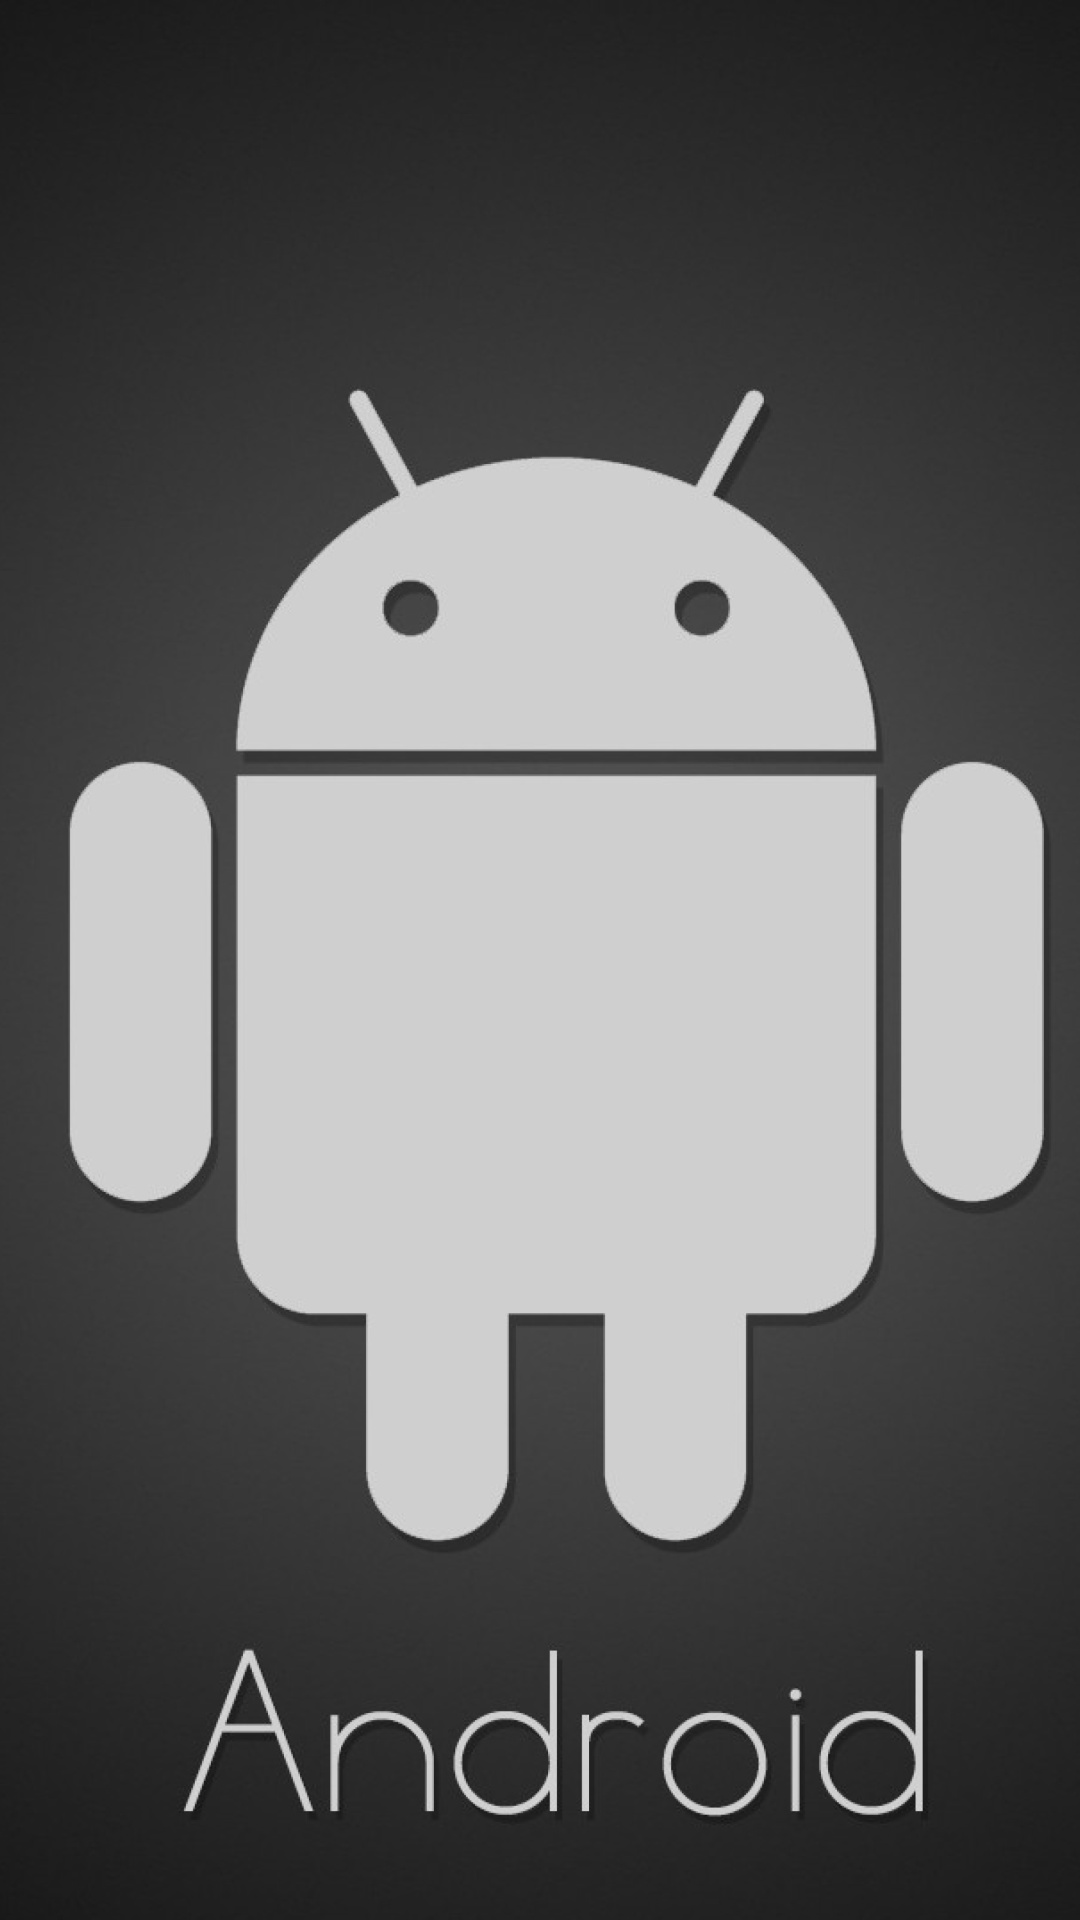 Android Google Logo wallpaper 1080x1920